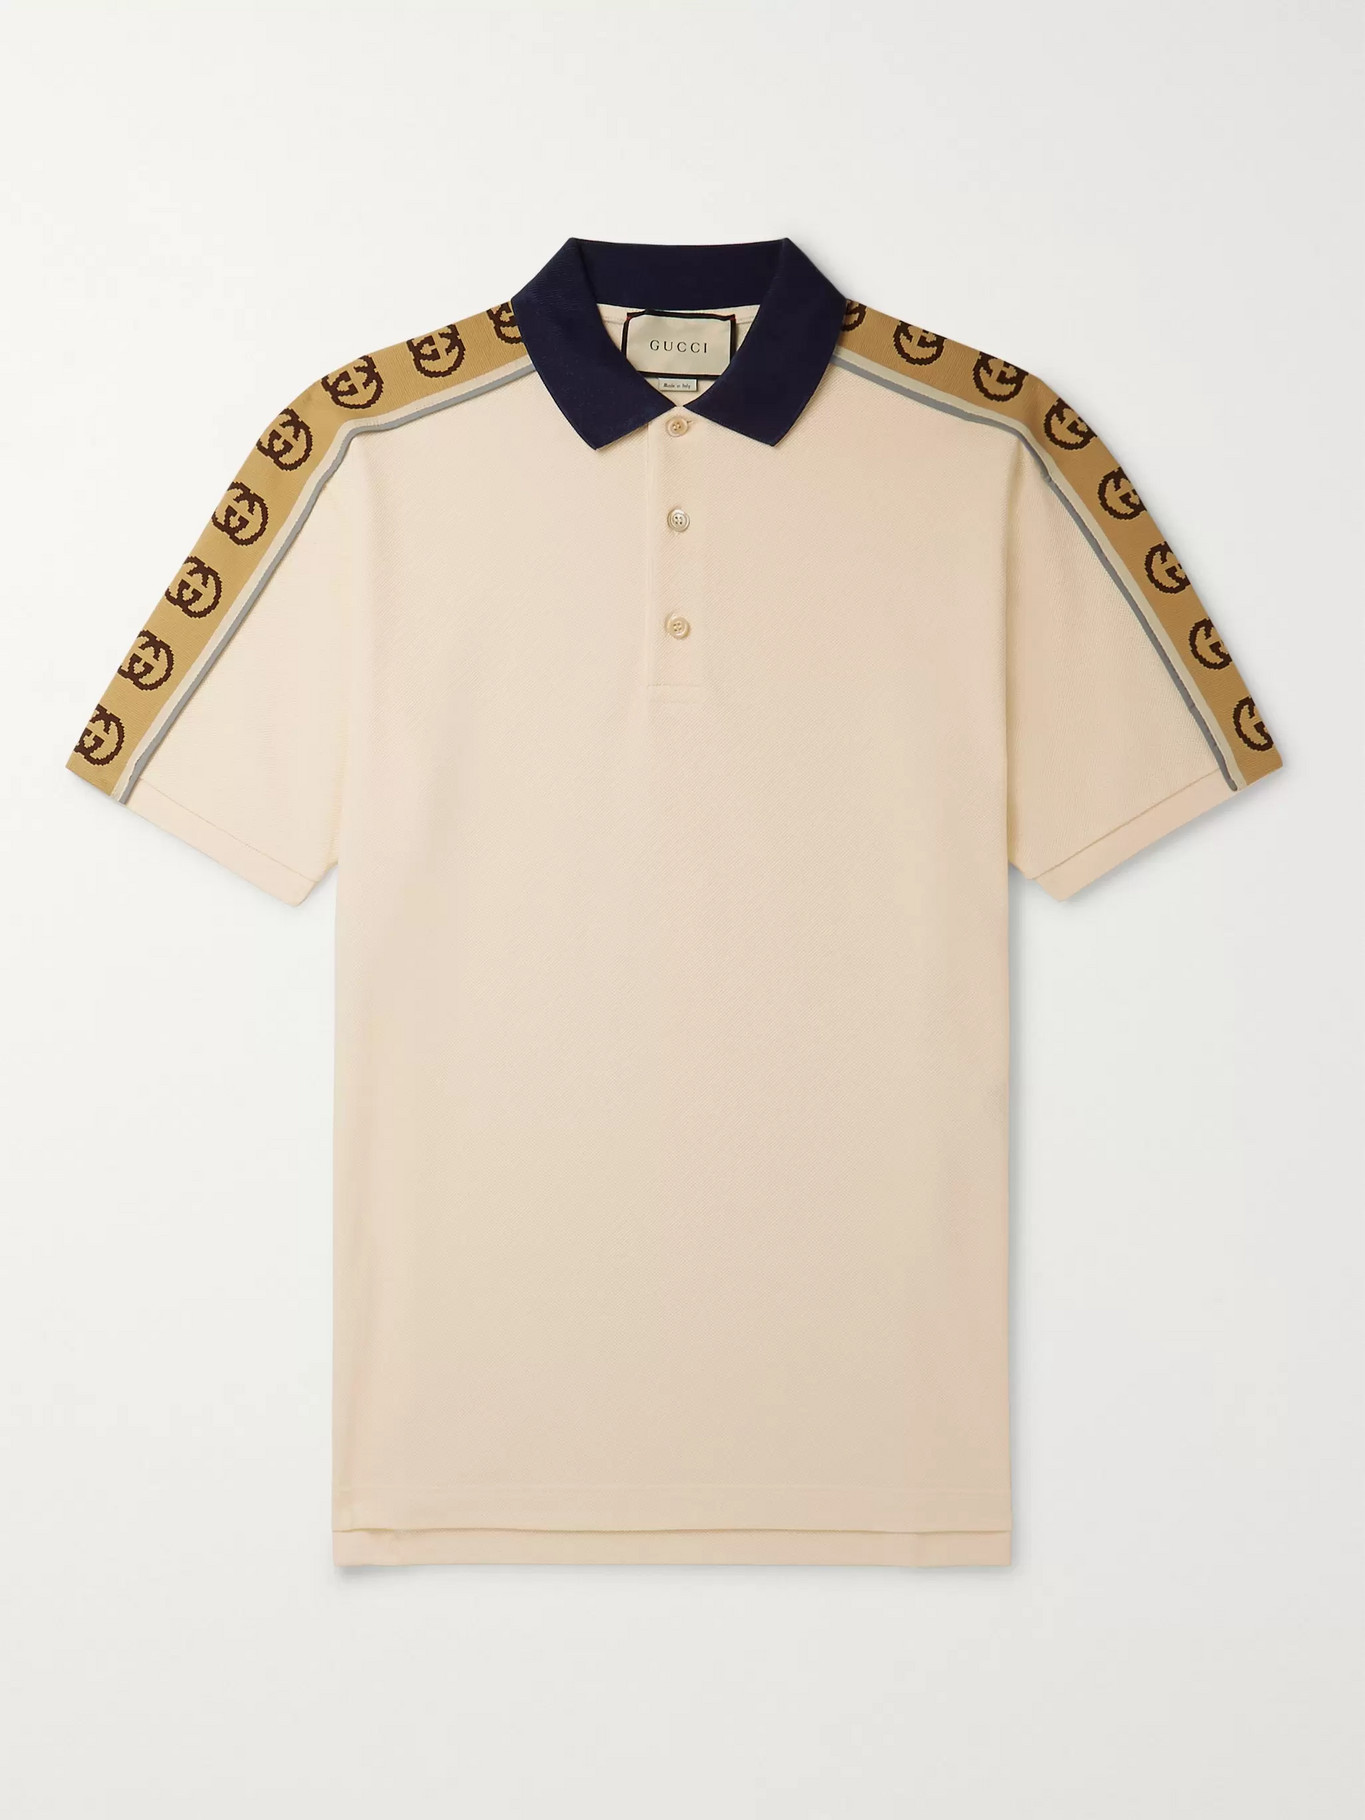 Gucci Polo Shirt Size Chart